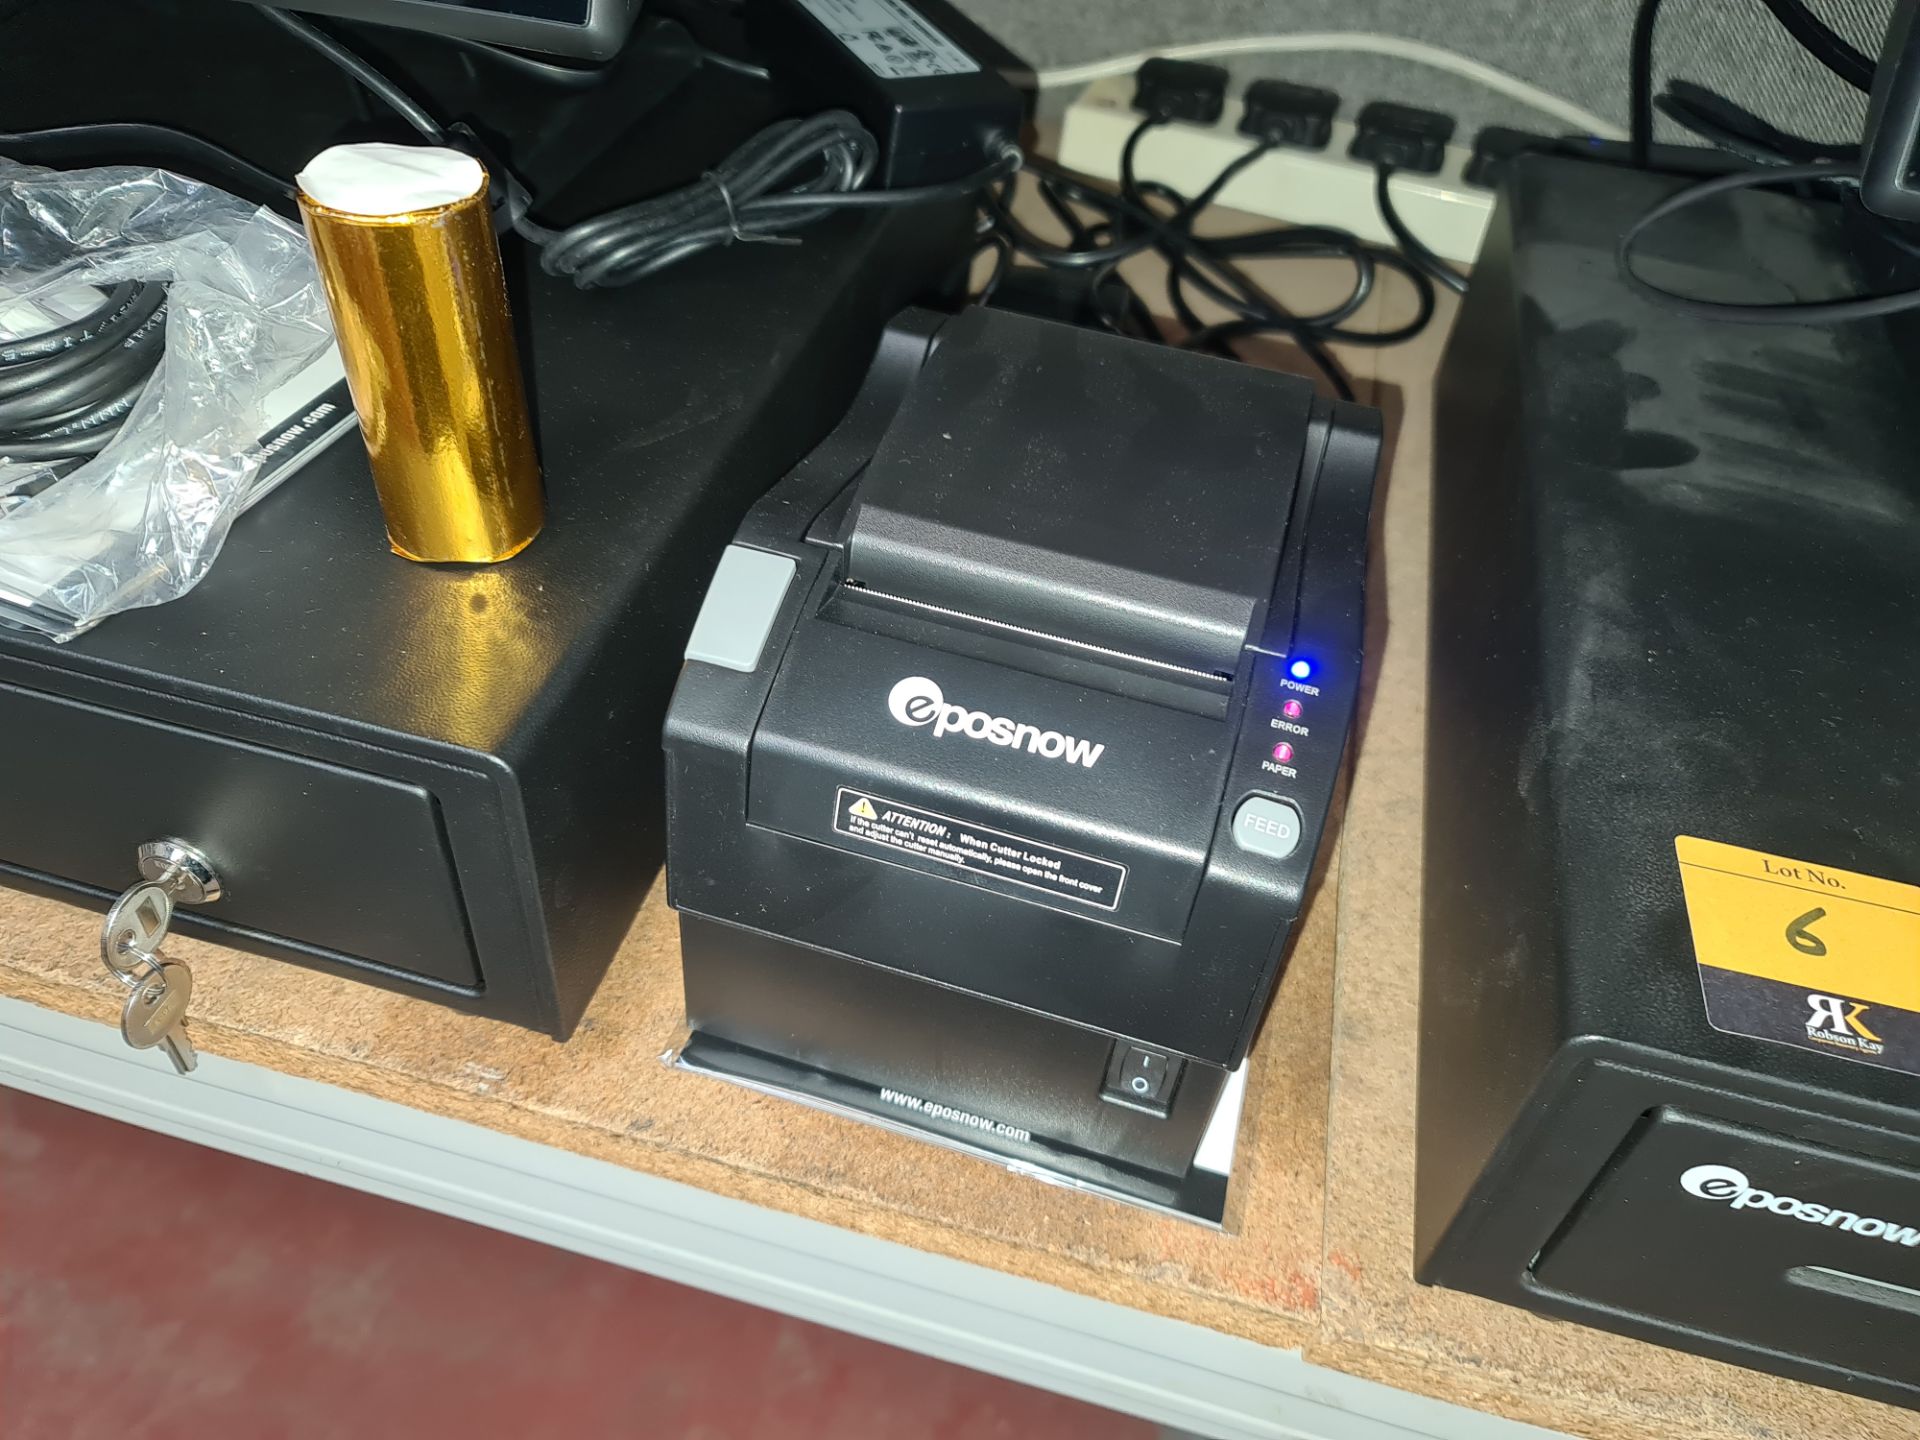 EPOSNOW touchscreen EPOS terminal plus cash drawer & EPOSNOW receipt printer. This lot is being sold - Image 3 of 12